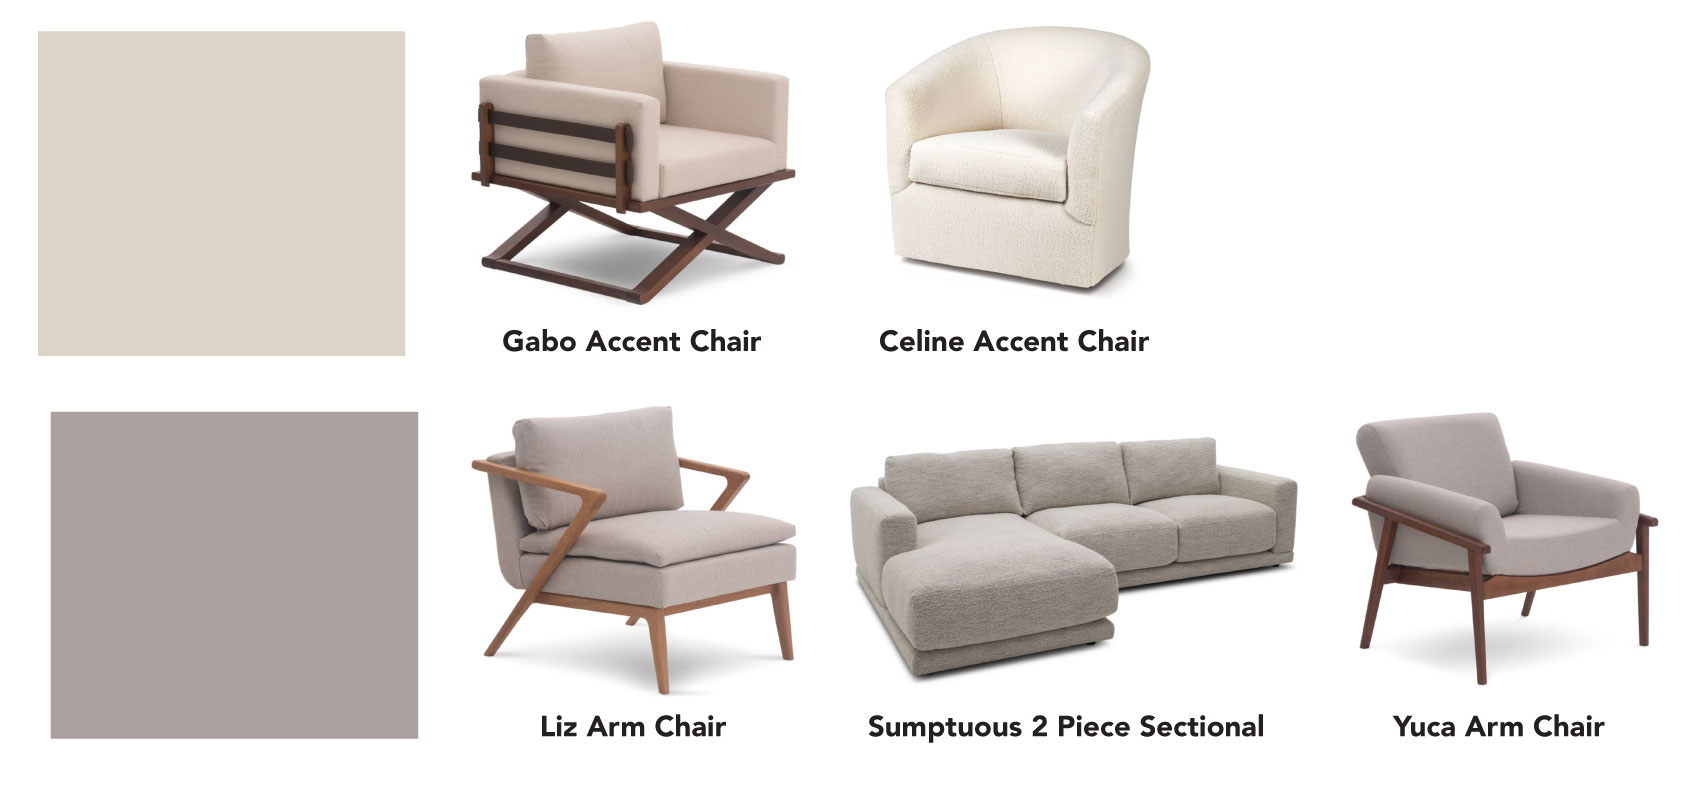 Gabo Accent Chair. Celine Accent Chair. Liz Arm Chair. Sumptuous 2 Pc Sectional. Yuca Arm Chair.